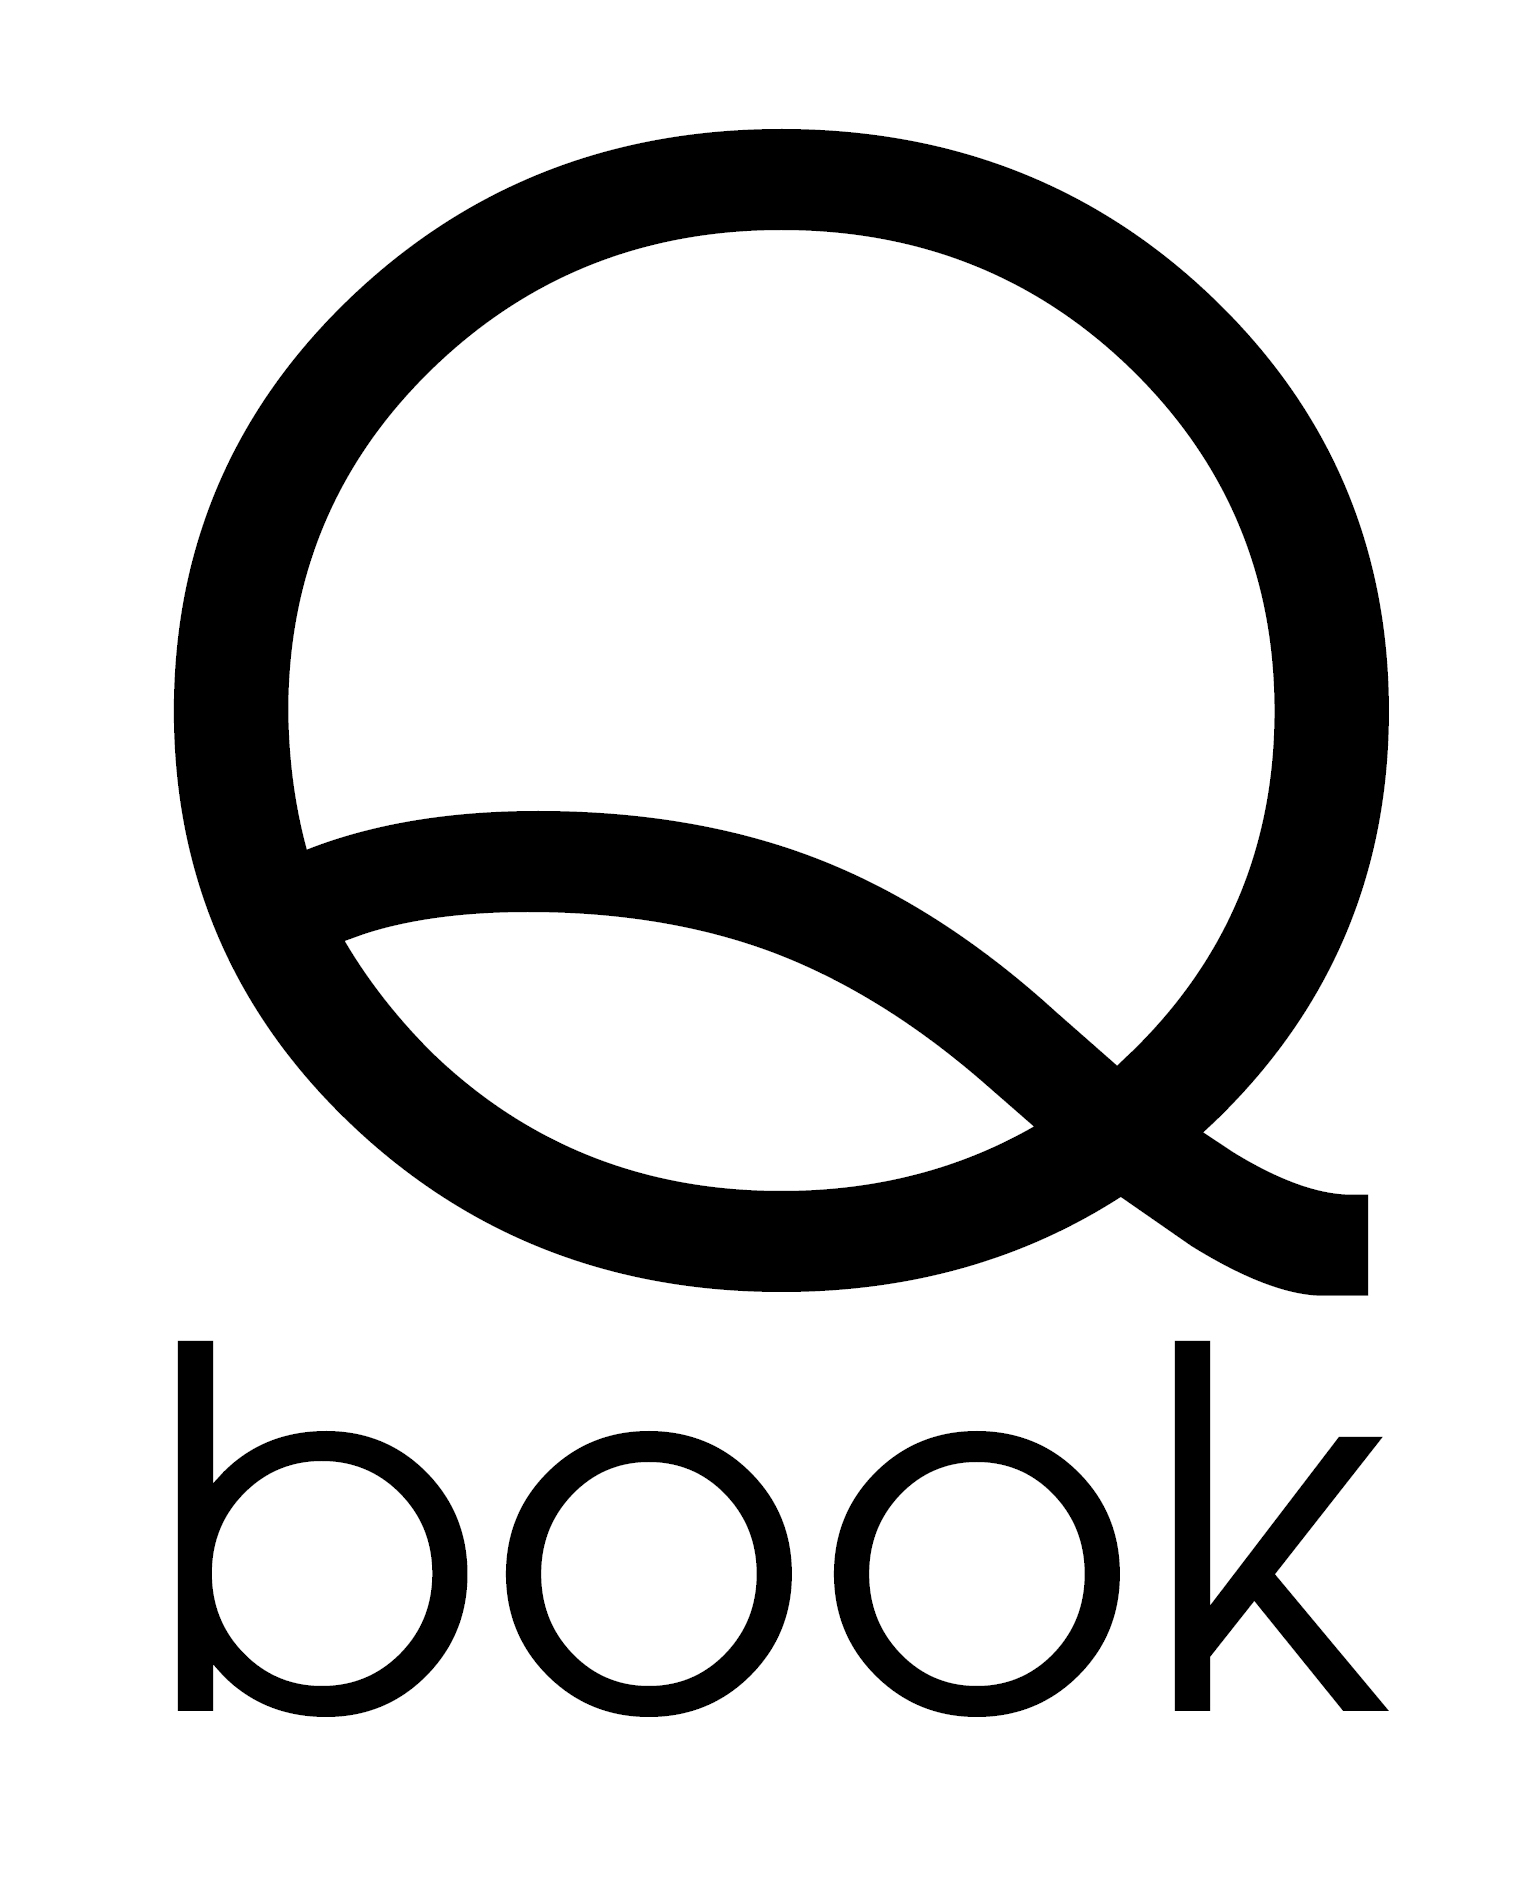 Q-book